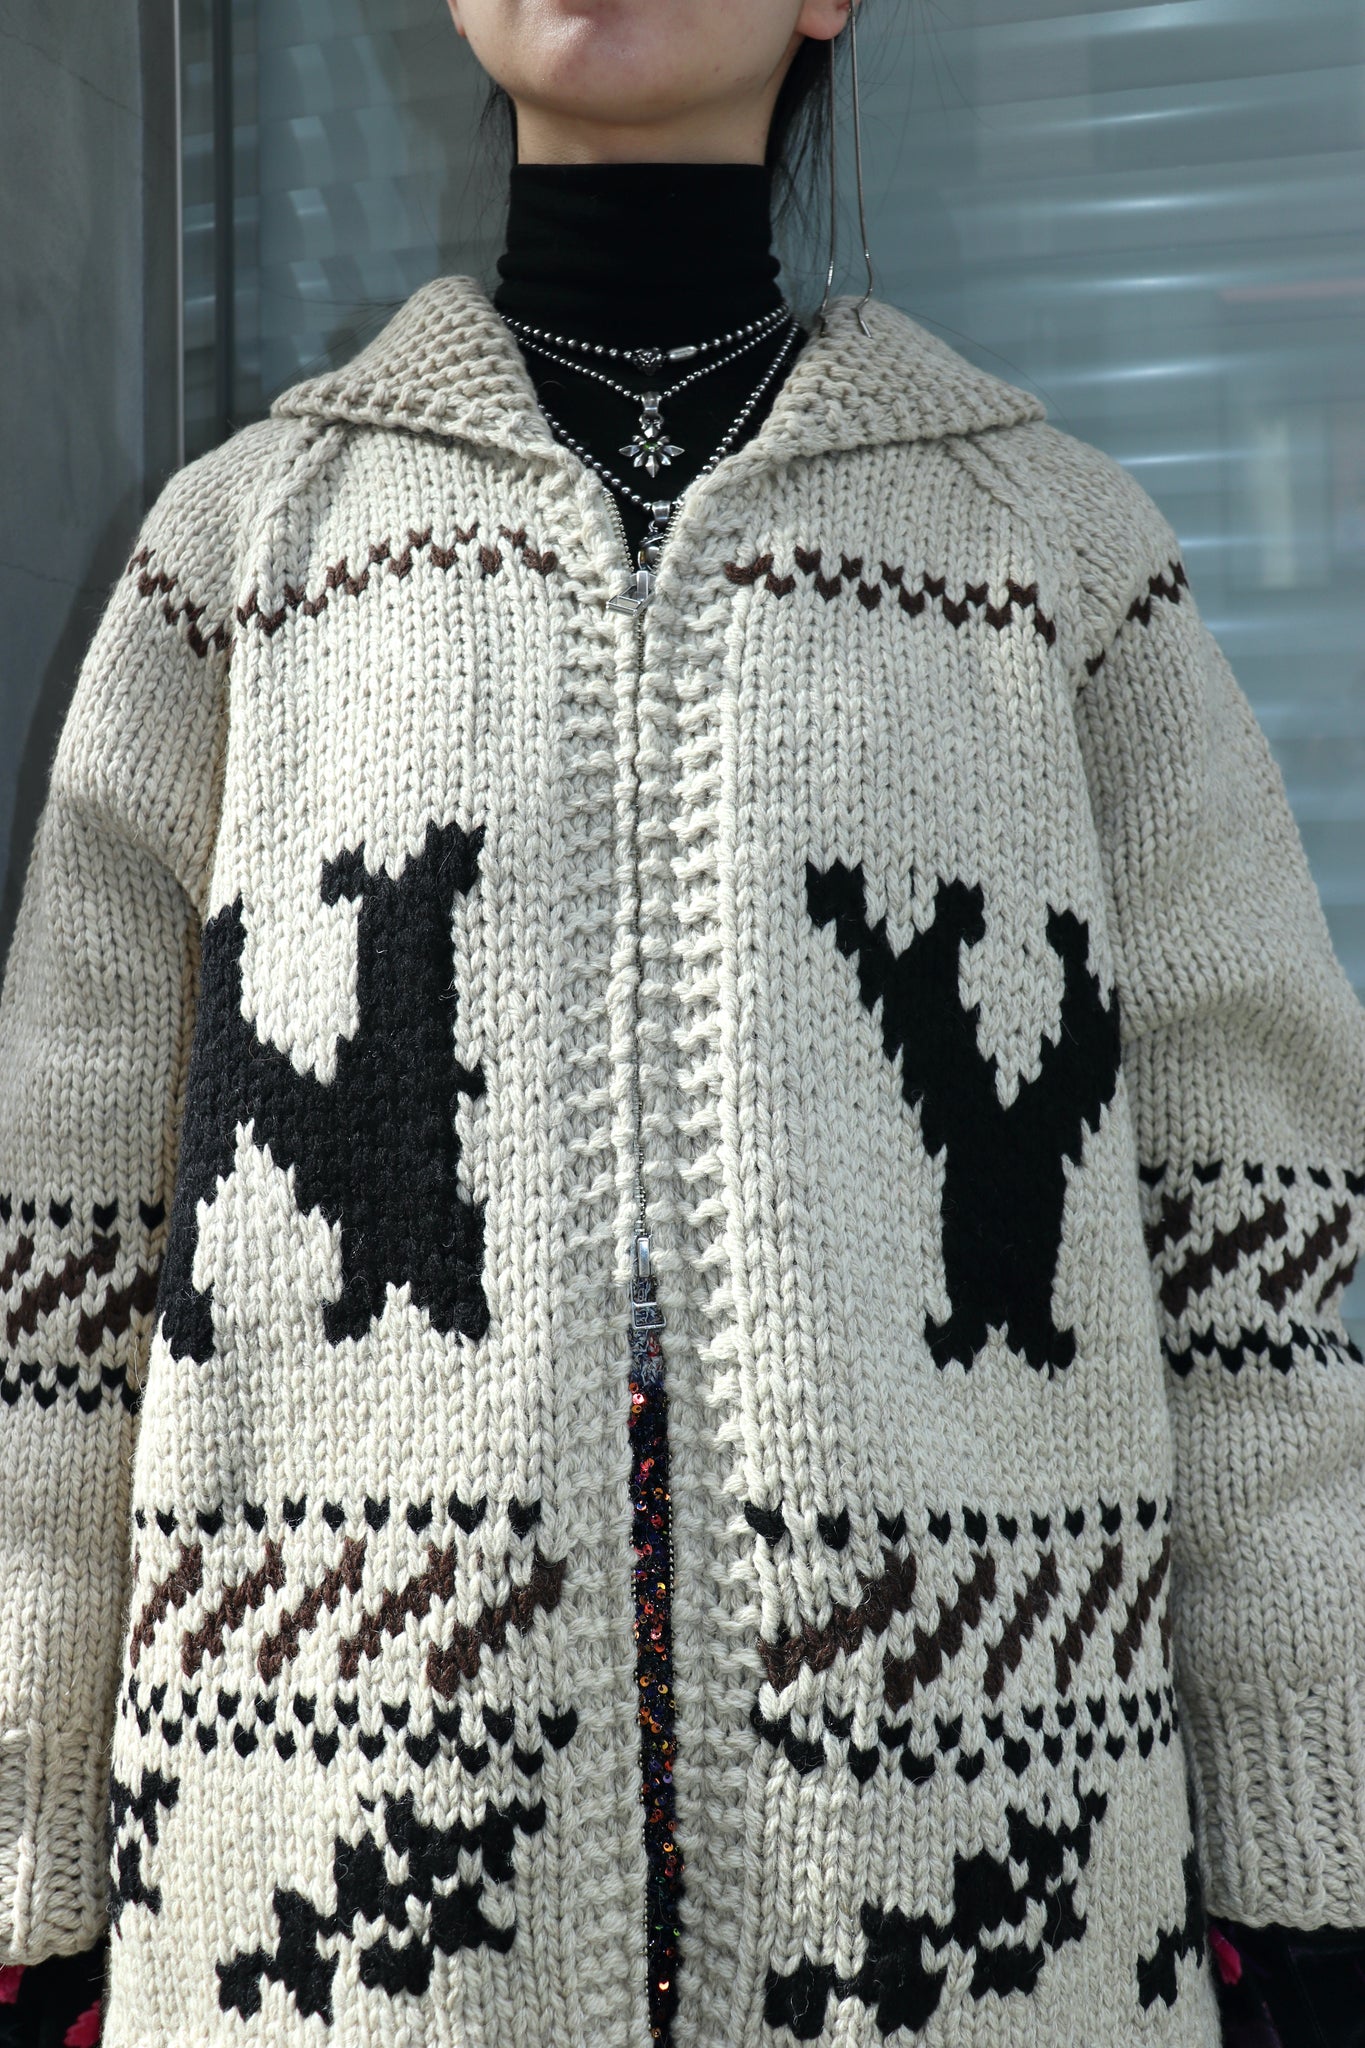 Styling image using Belper 22aw Cowichan Knit Jacket